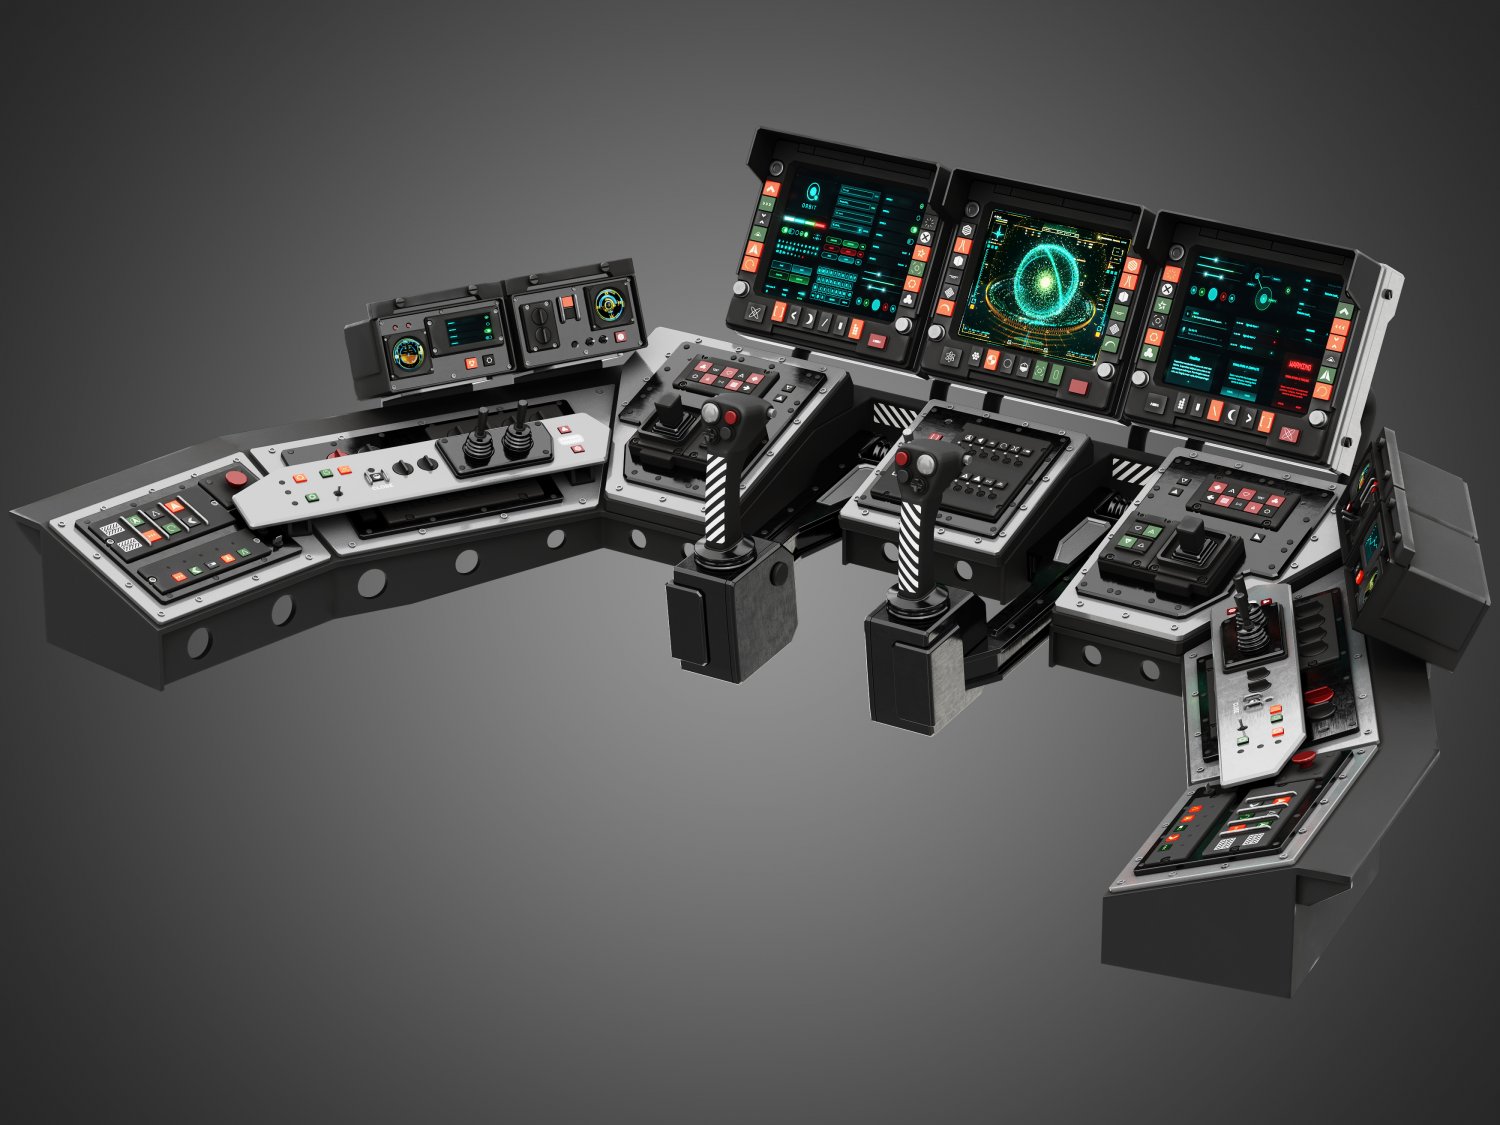 starship control panel